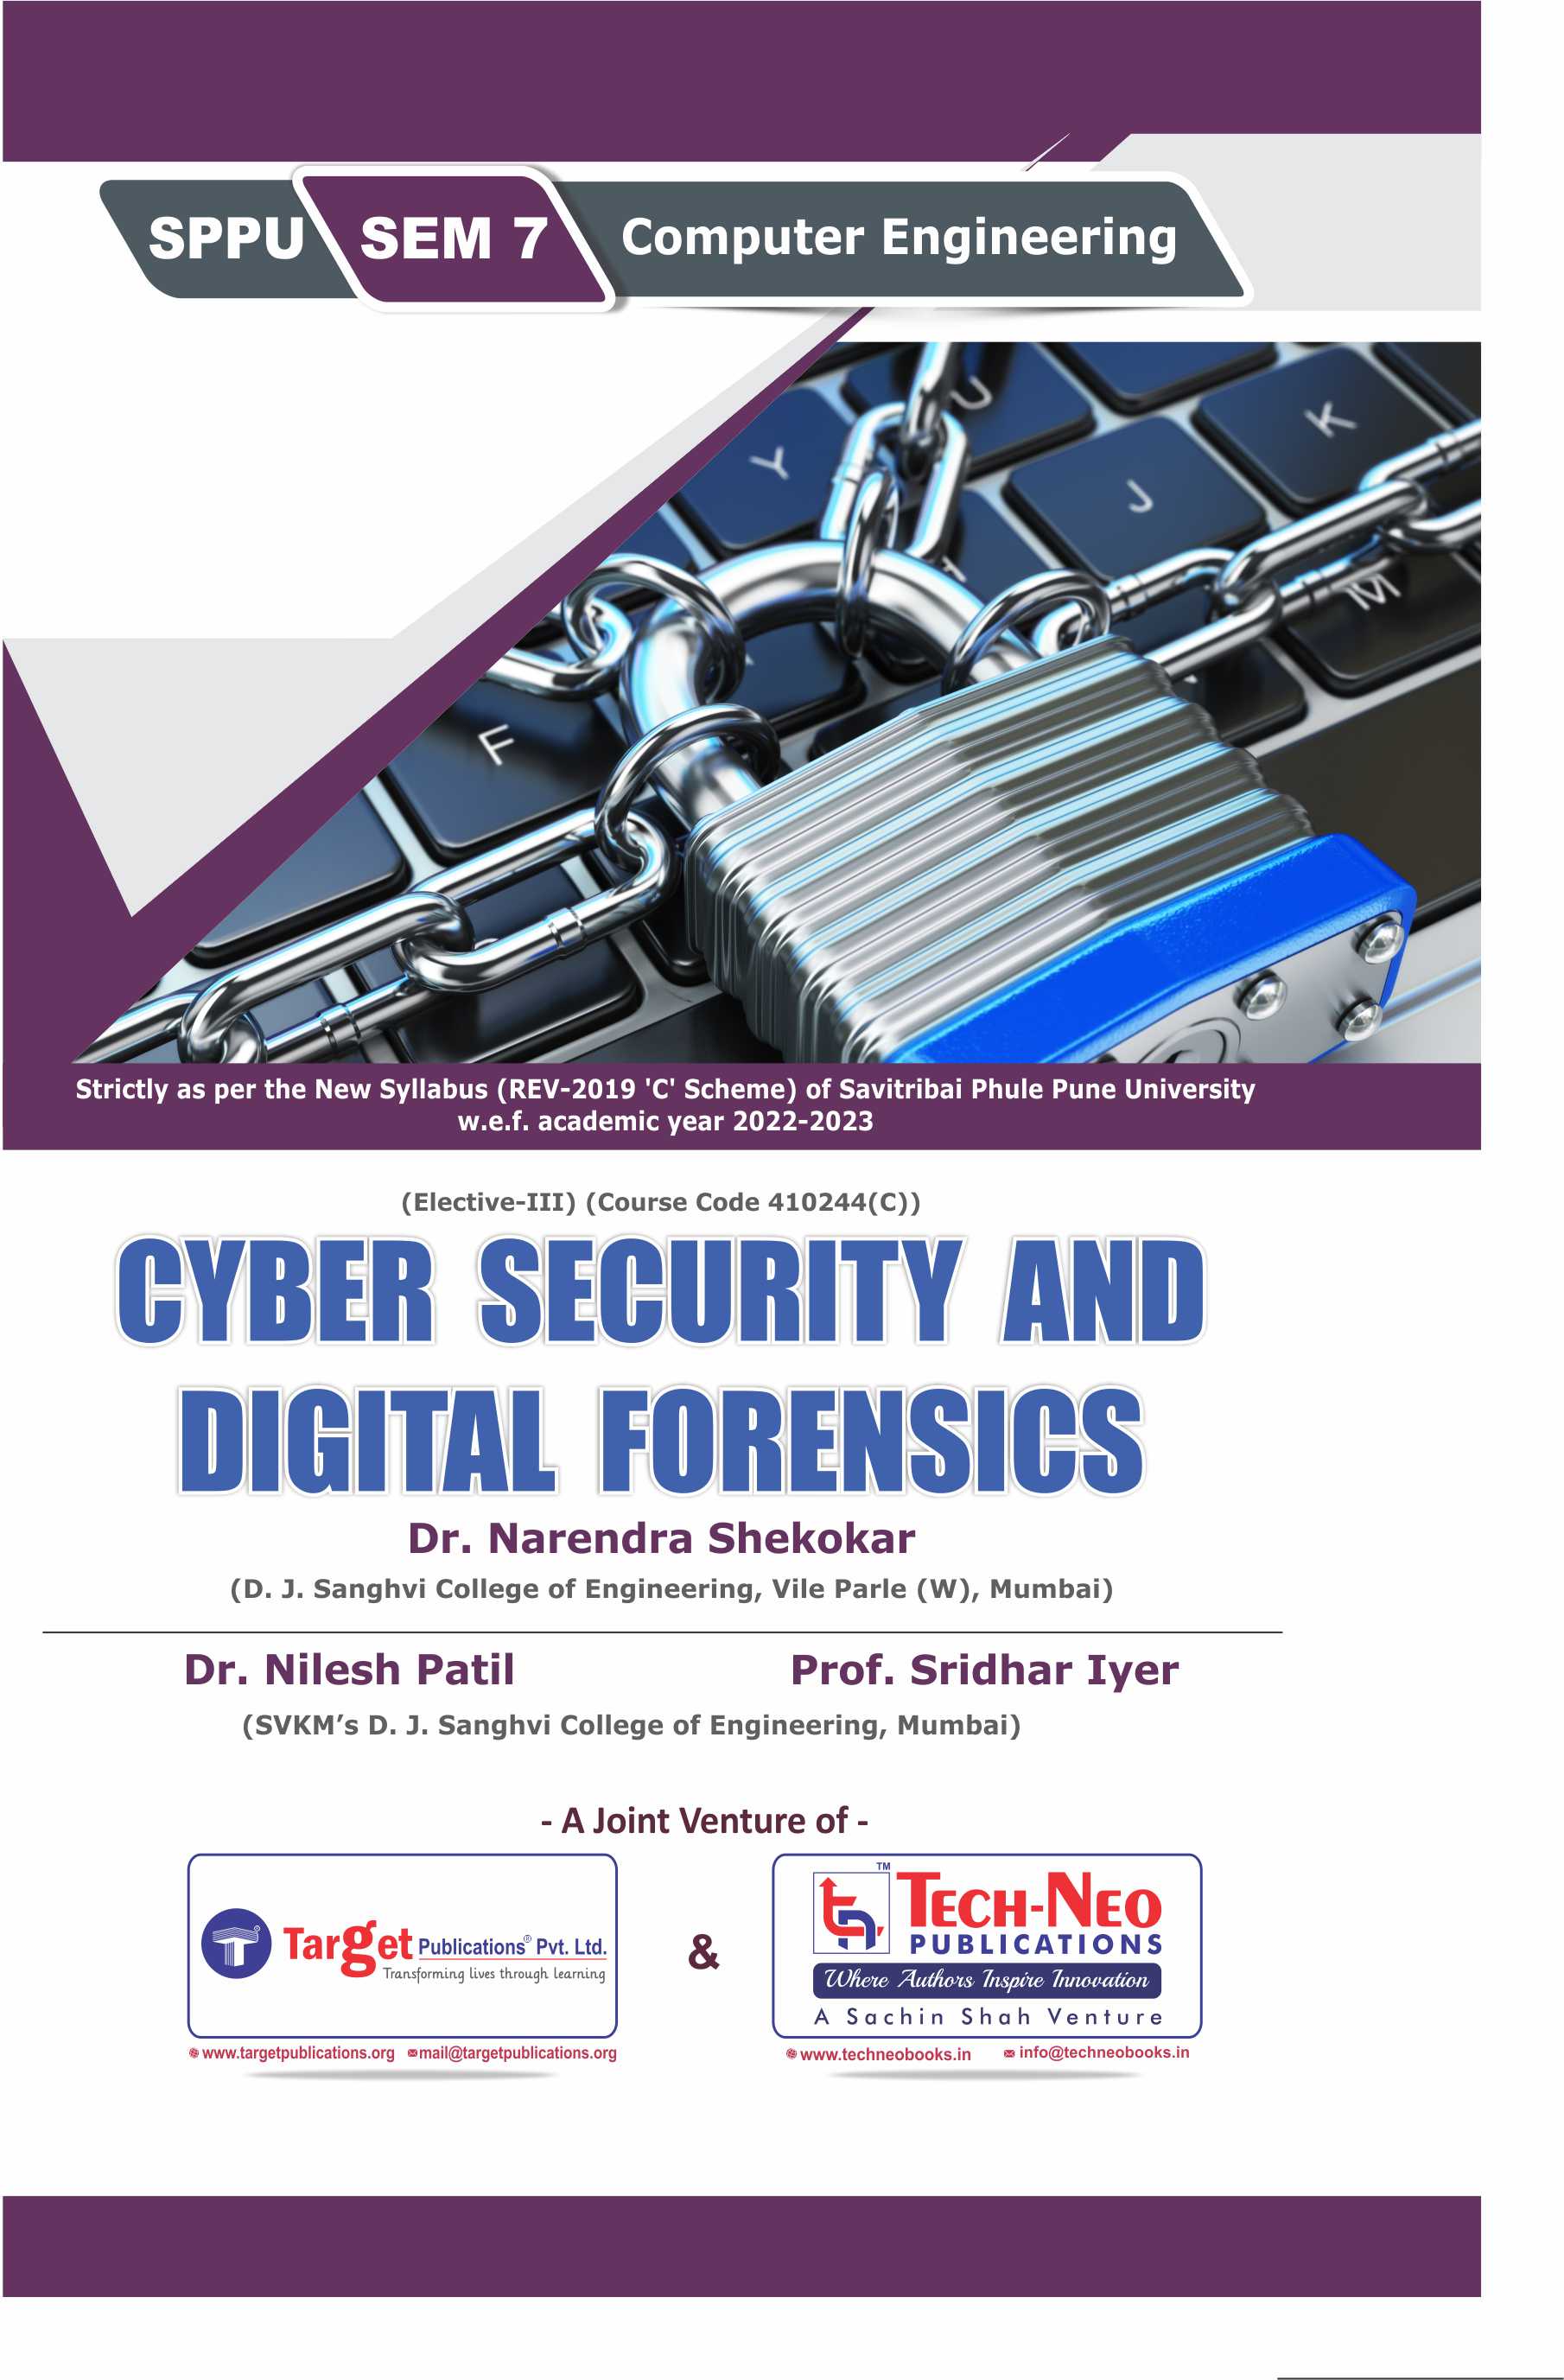 Cyber Security & Digital Forensics